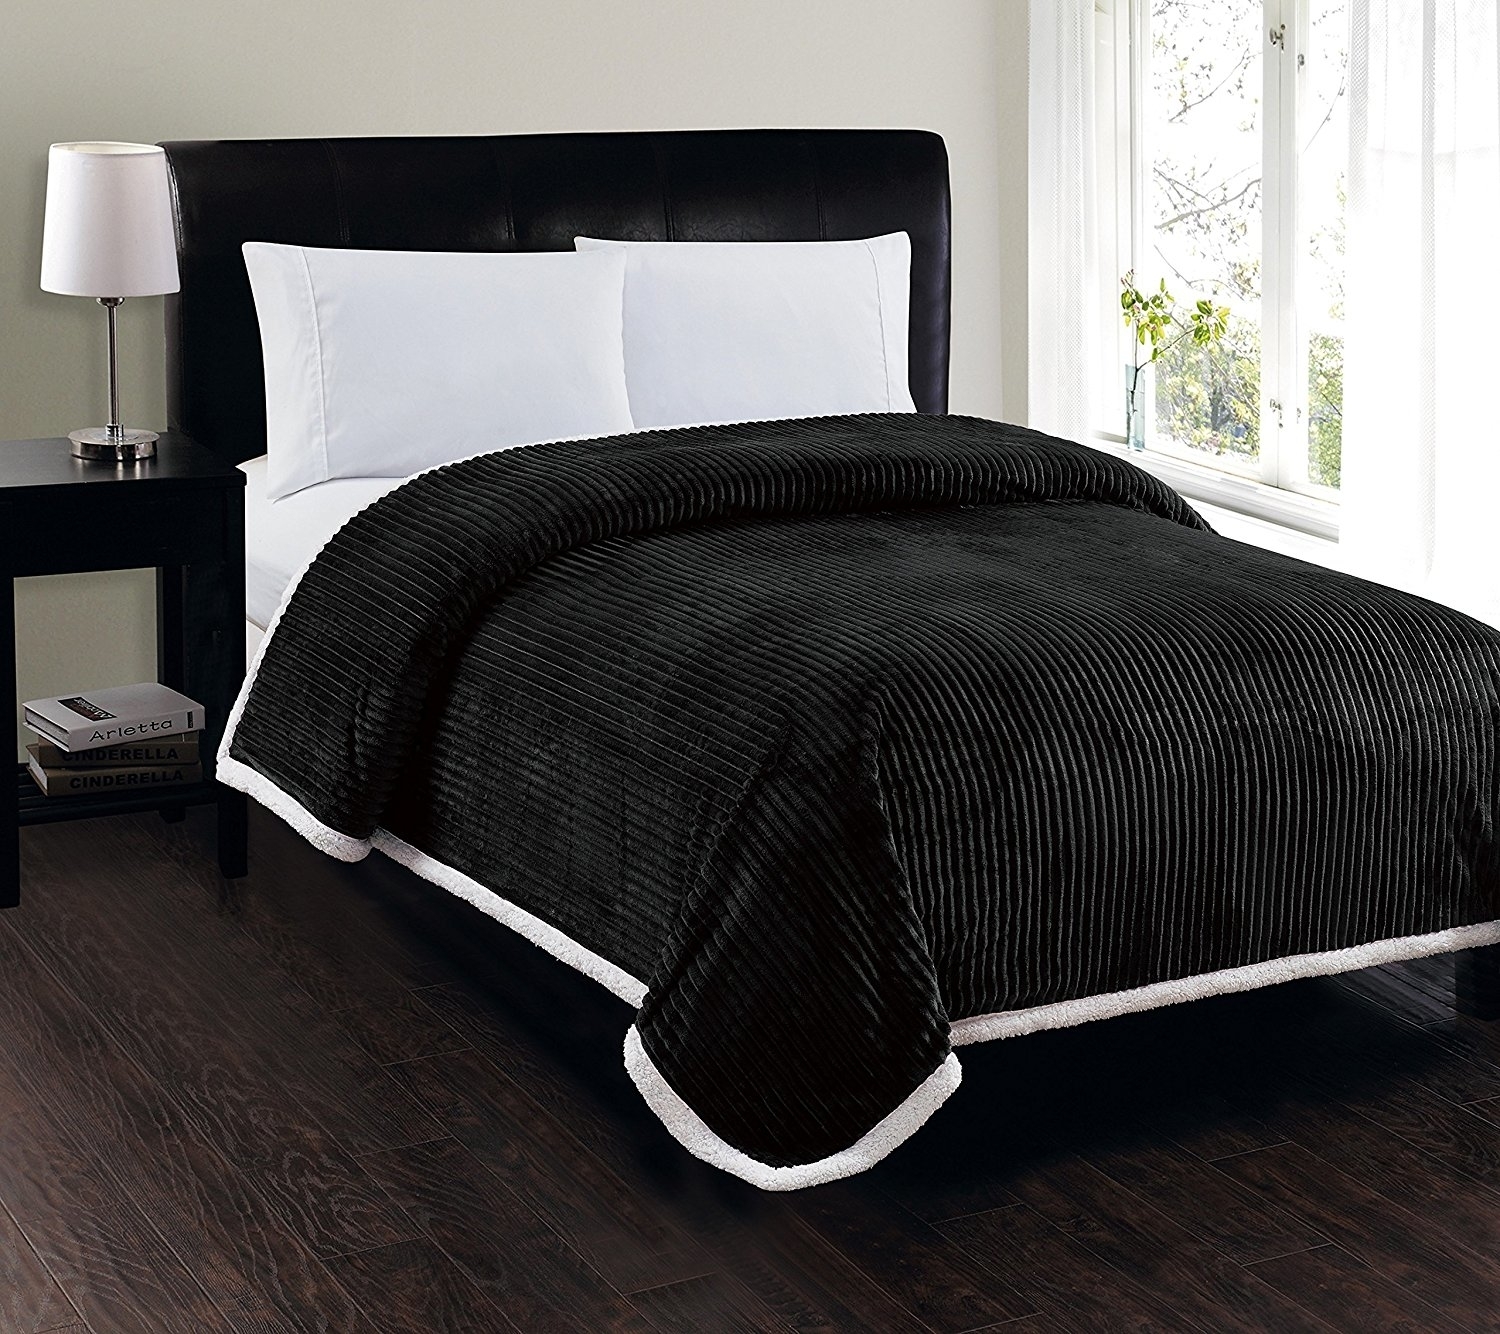 Elegant Comfort Best, Softest, Luxury Micro-sherpa Blanket - Heavy Weight Stripe Design Ultra Plush Blanket - Black, Full/queen